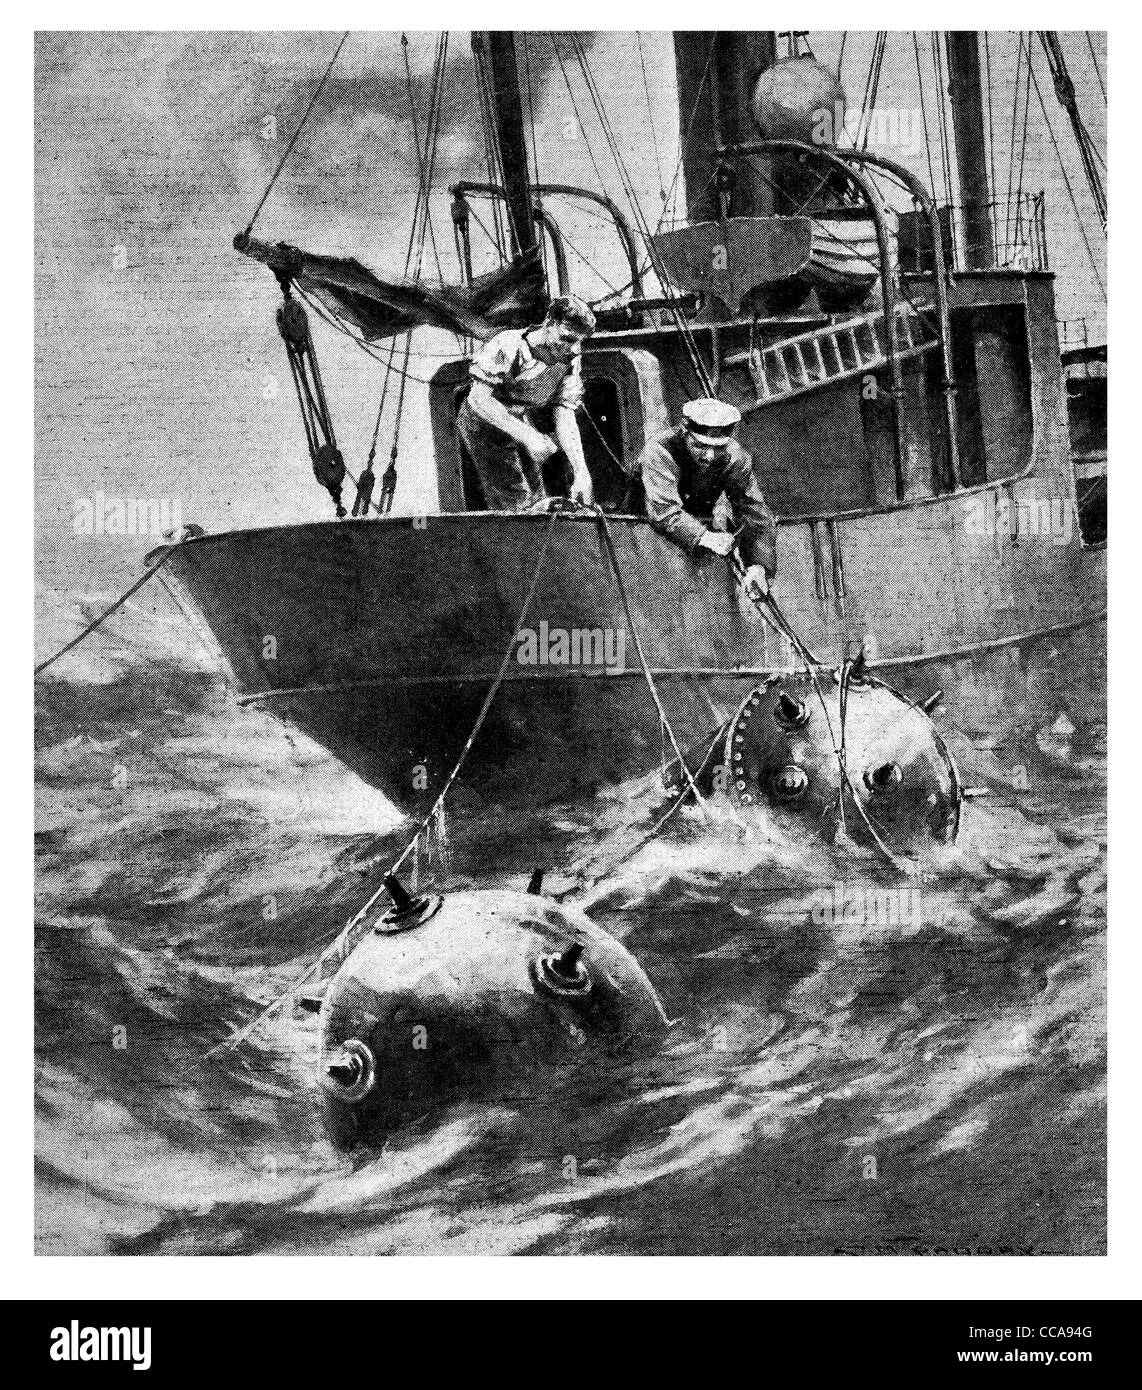 1917 2 sailors trawler cutting mines free mine explosive danger explosive explosives ship high seas ocean fishing boar scared Stock Photo